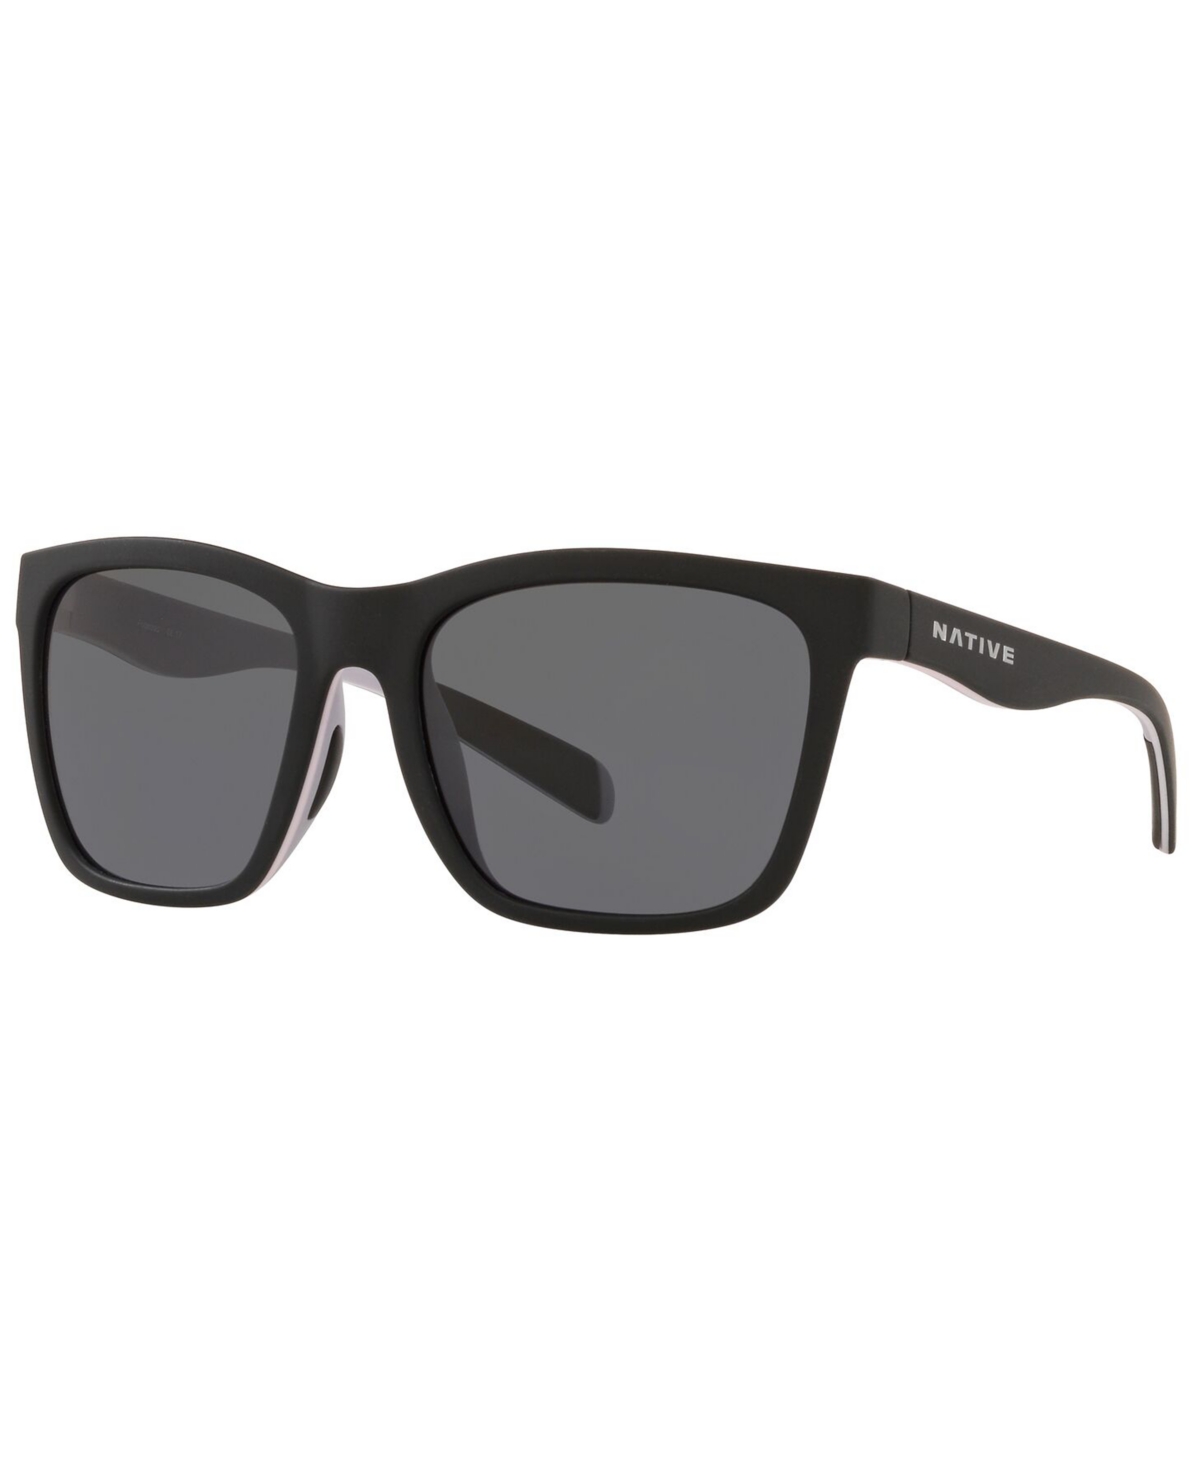 Native Eyewear Native Men's Polarized Sunglasses, Xd9005 56 In Matte Black,blush,violet,grey